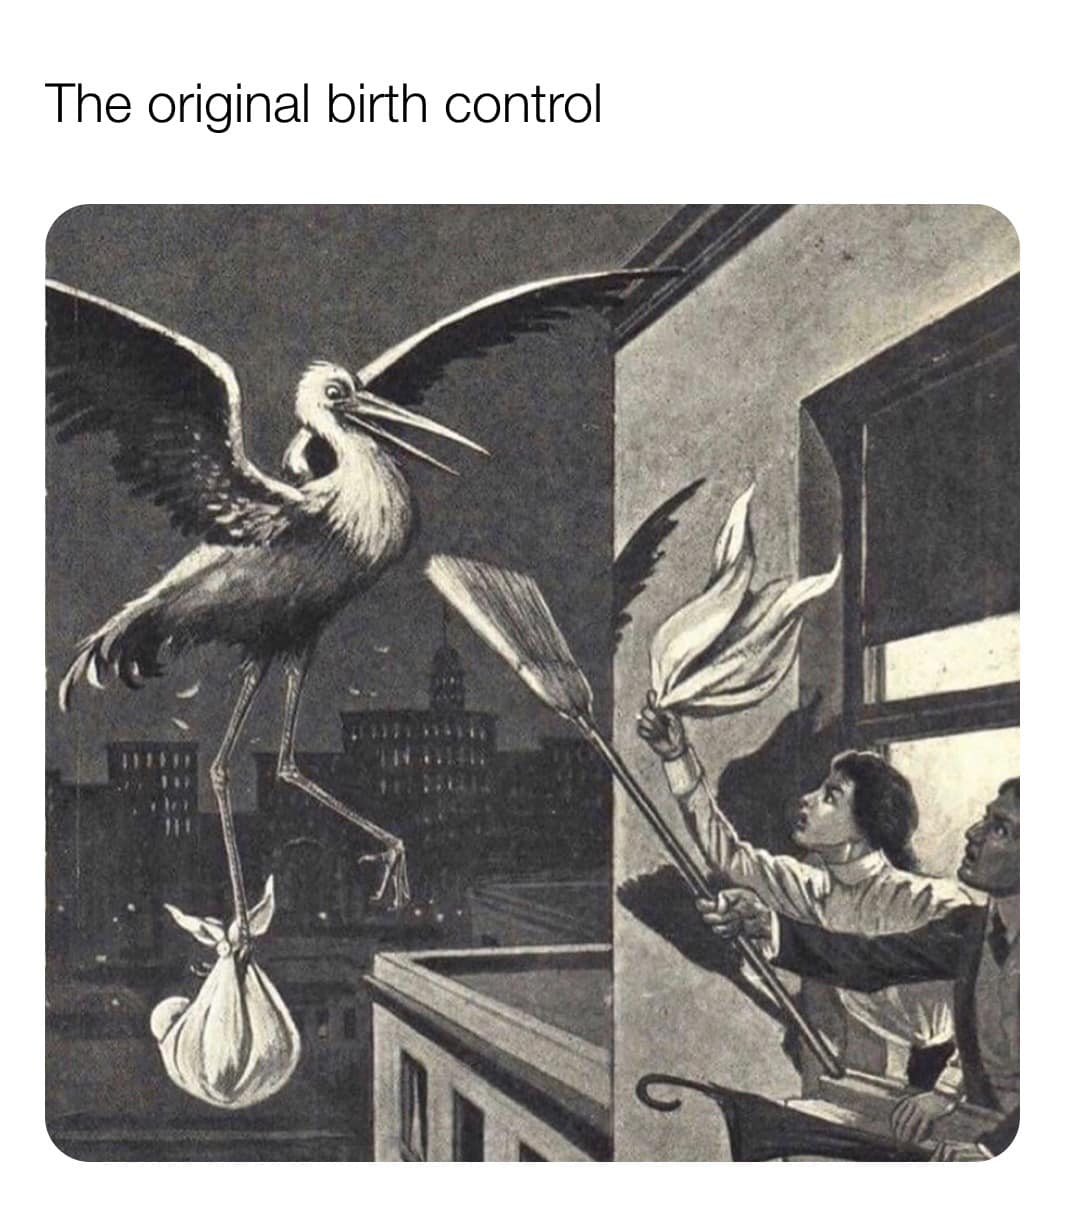 vintage birth control - The original birth control